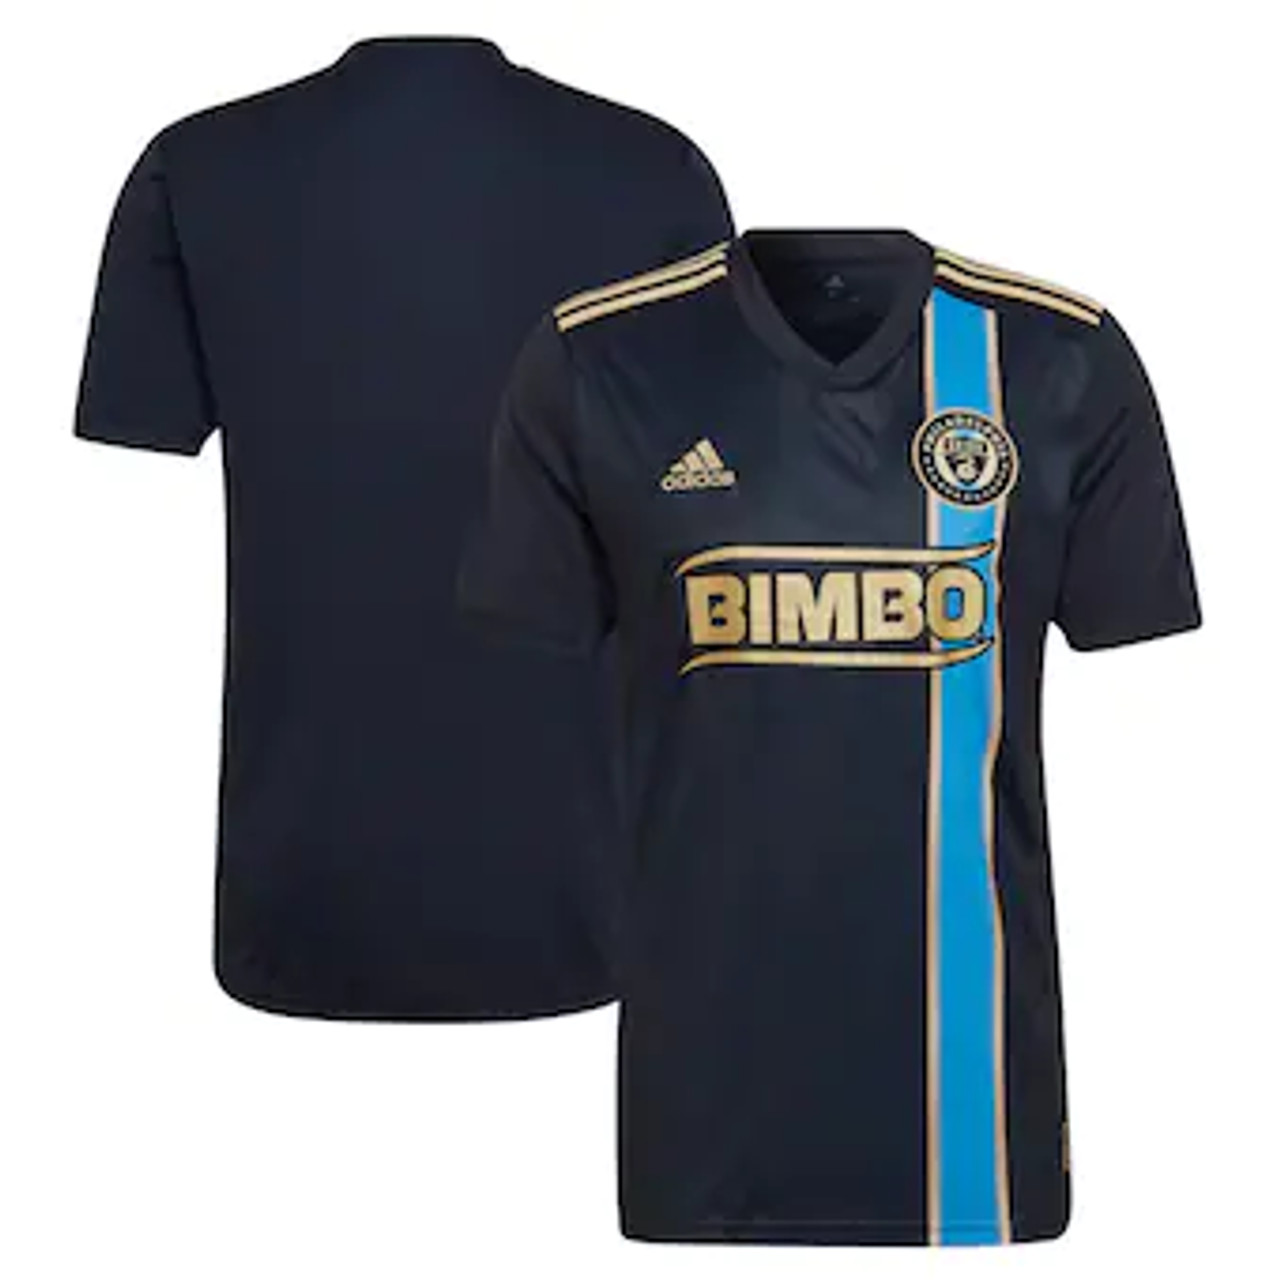 Philadelphia Union unveils jersey - SBI Soccer